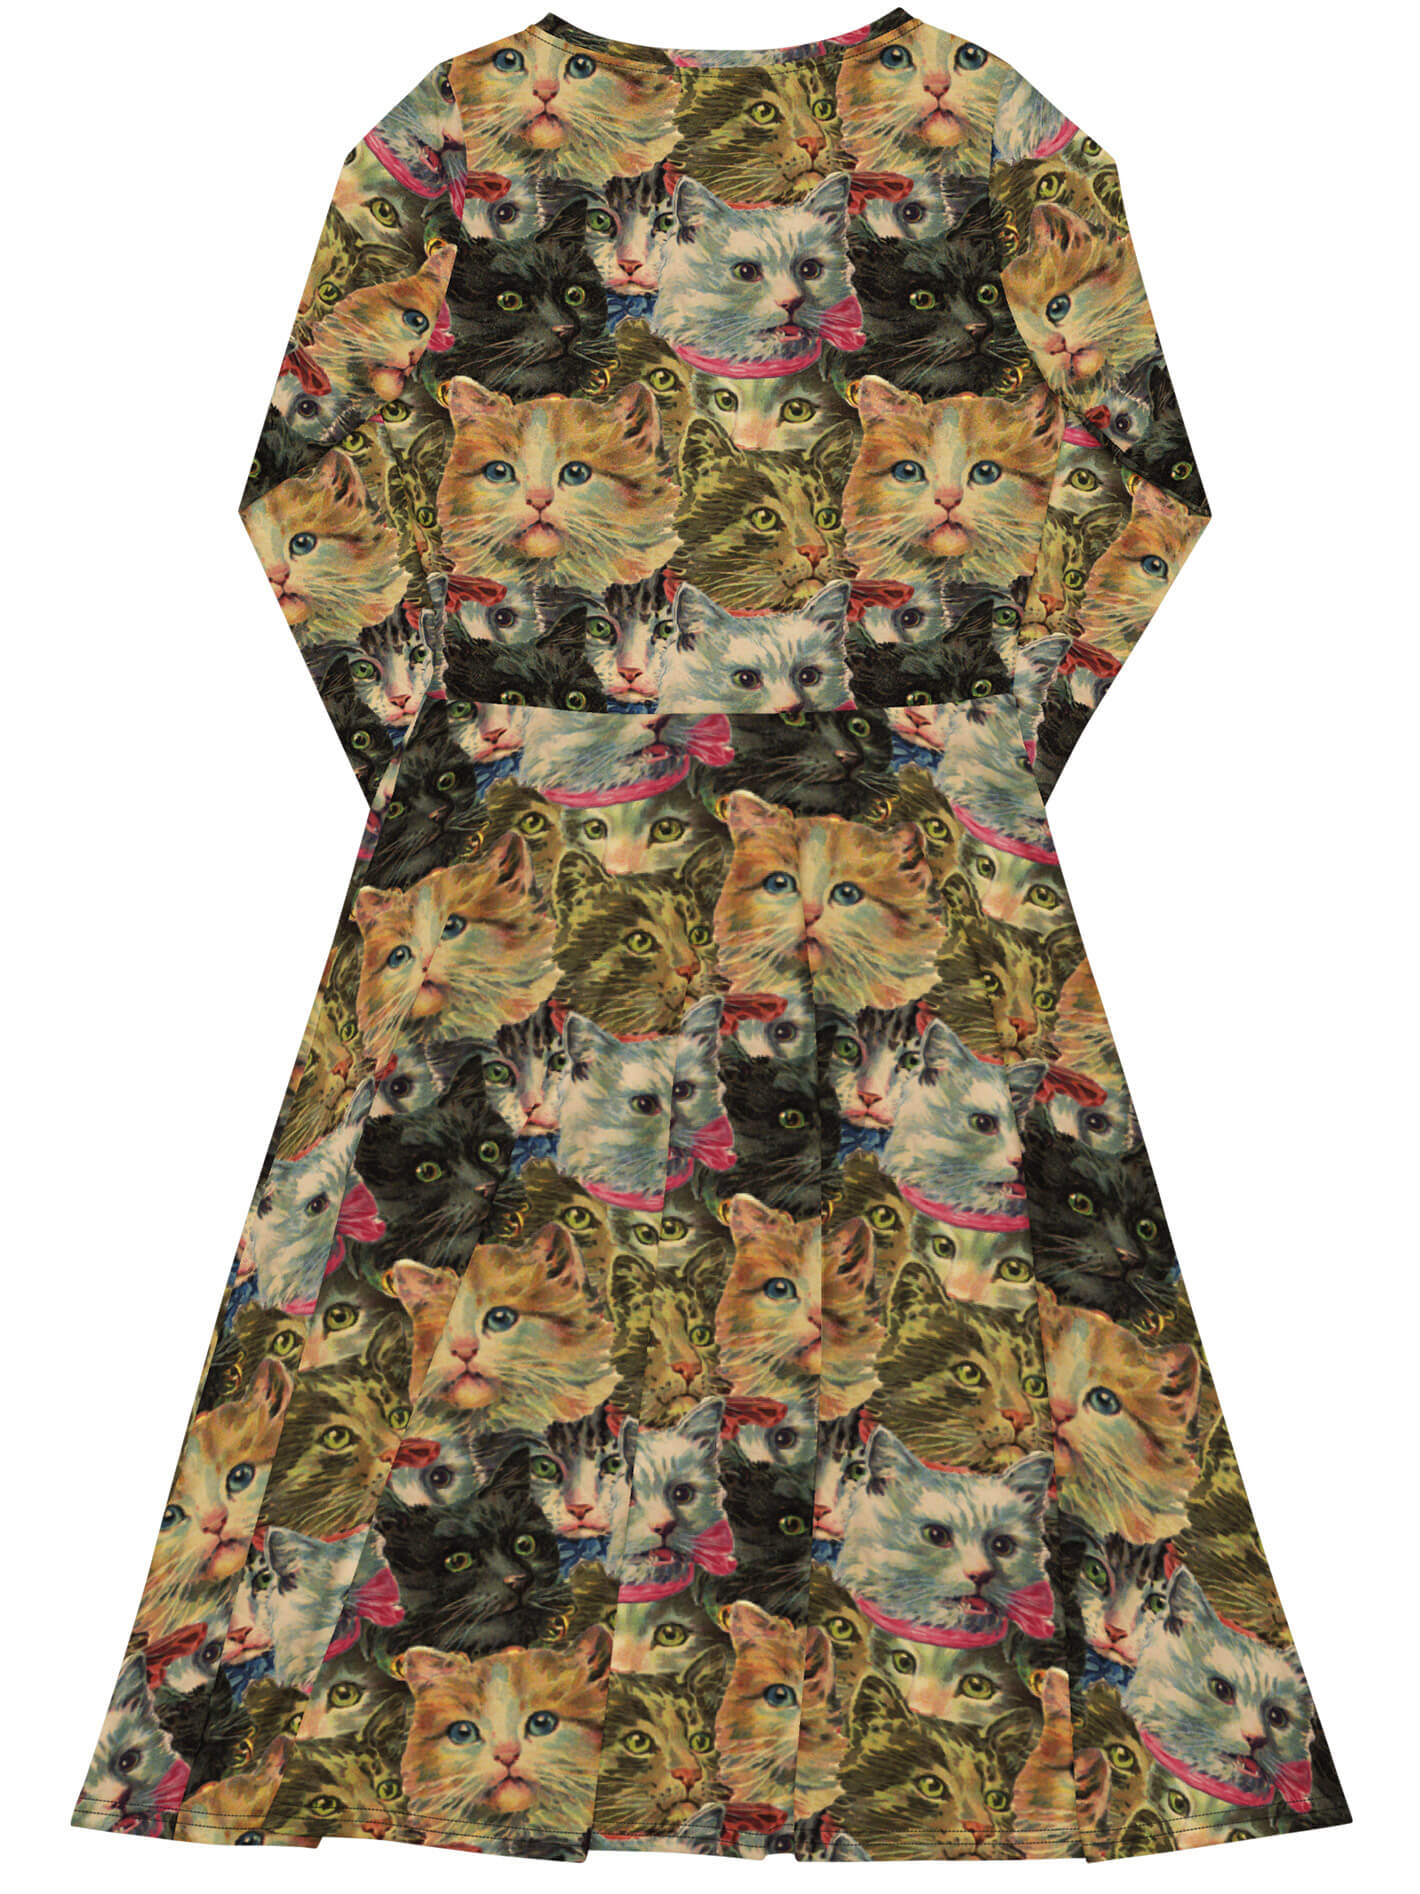 Plus size cat print dress.